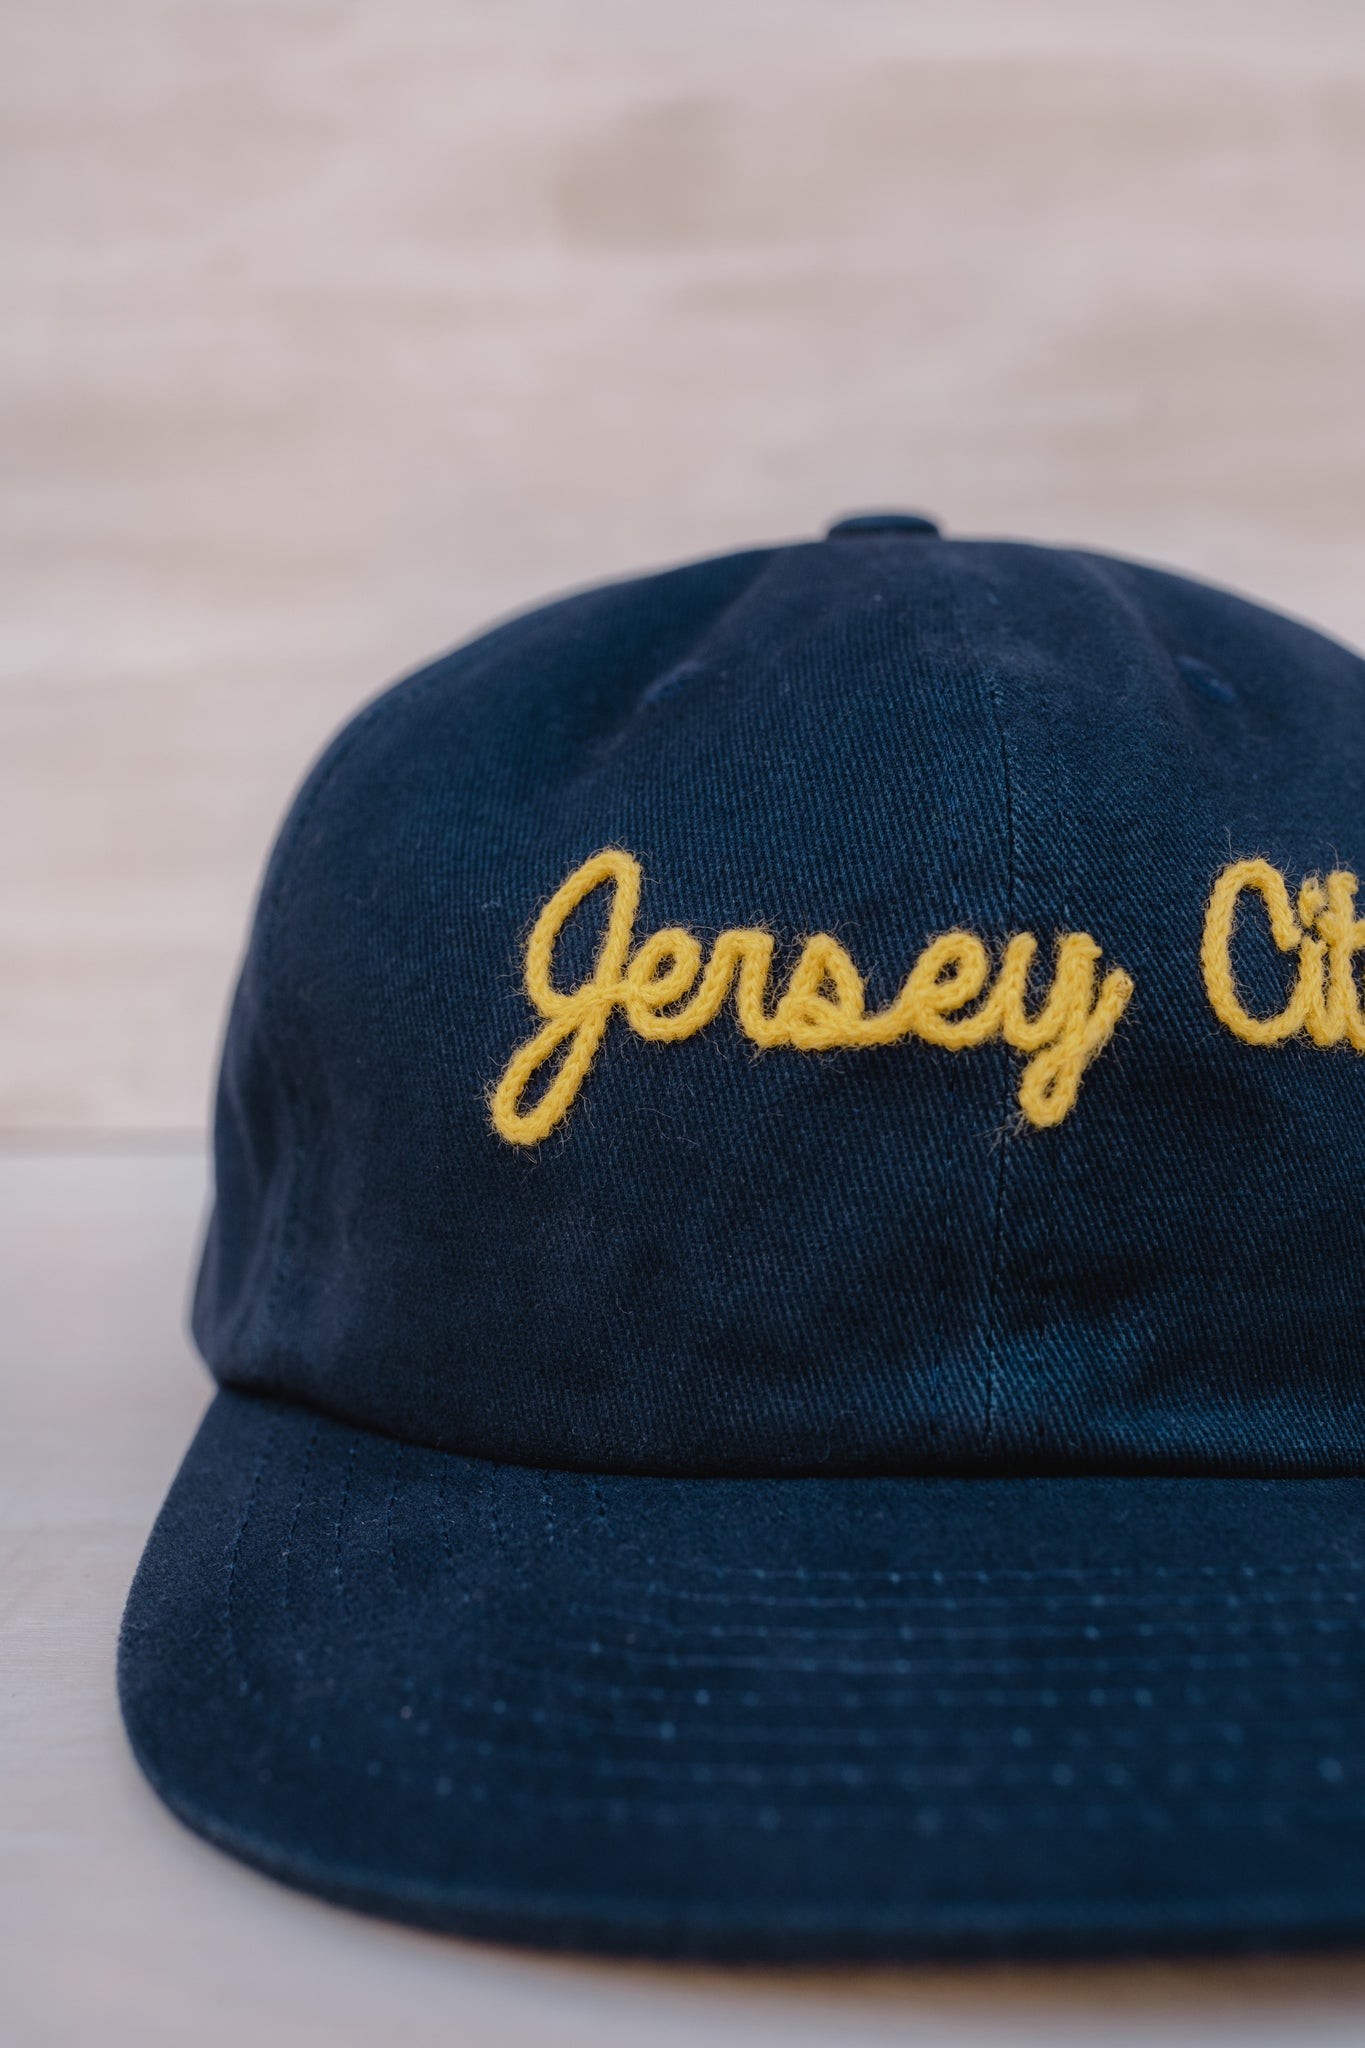 Hat: Jersey City Chainstitch – Kanibal & Co.